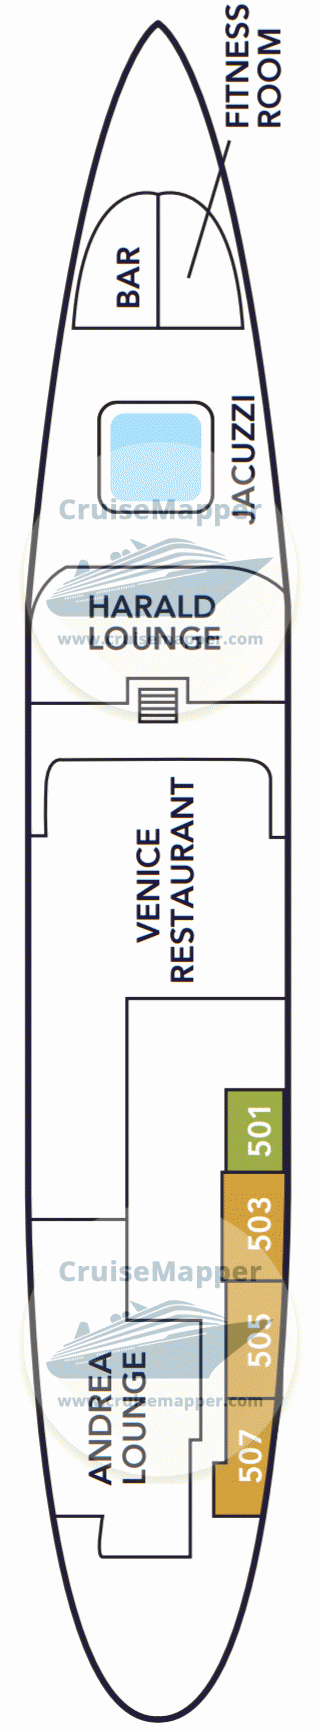 MS Serenissima Deck 05 - Lounges-Restaurant-Pool-Gym